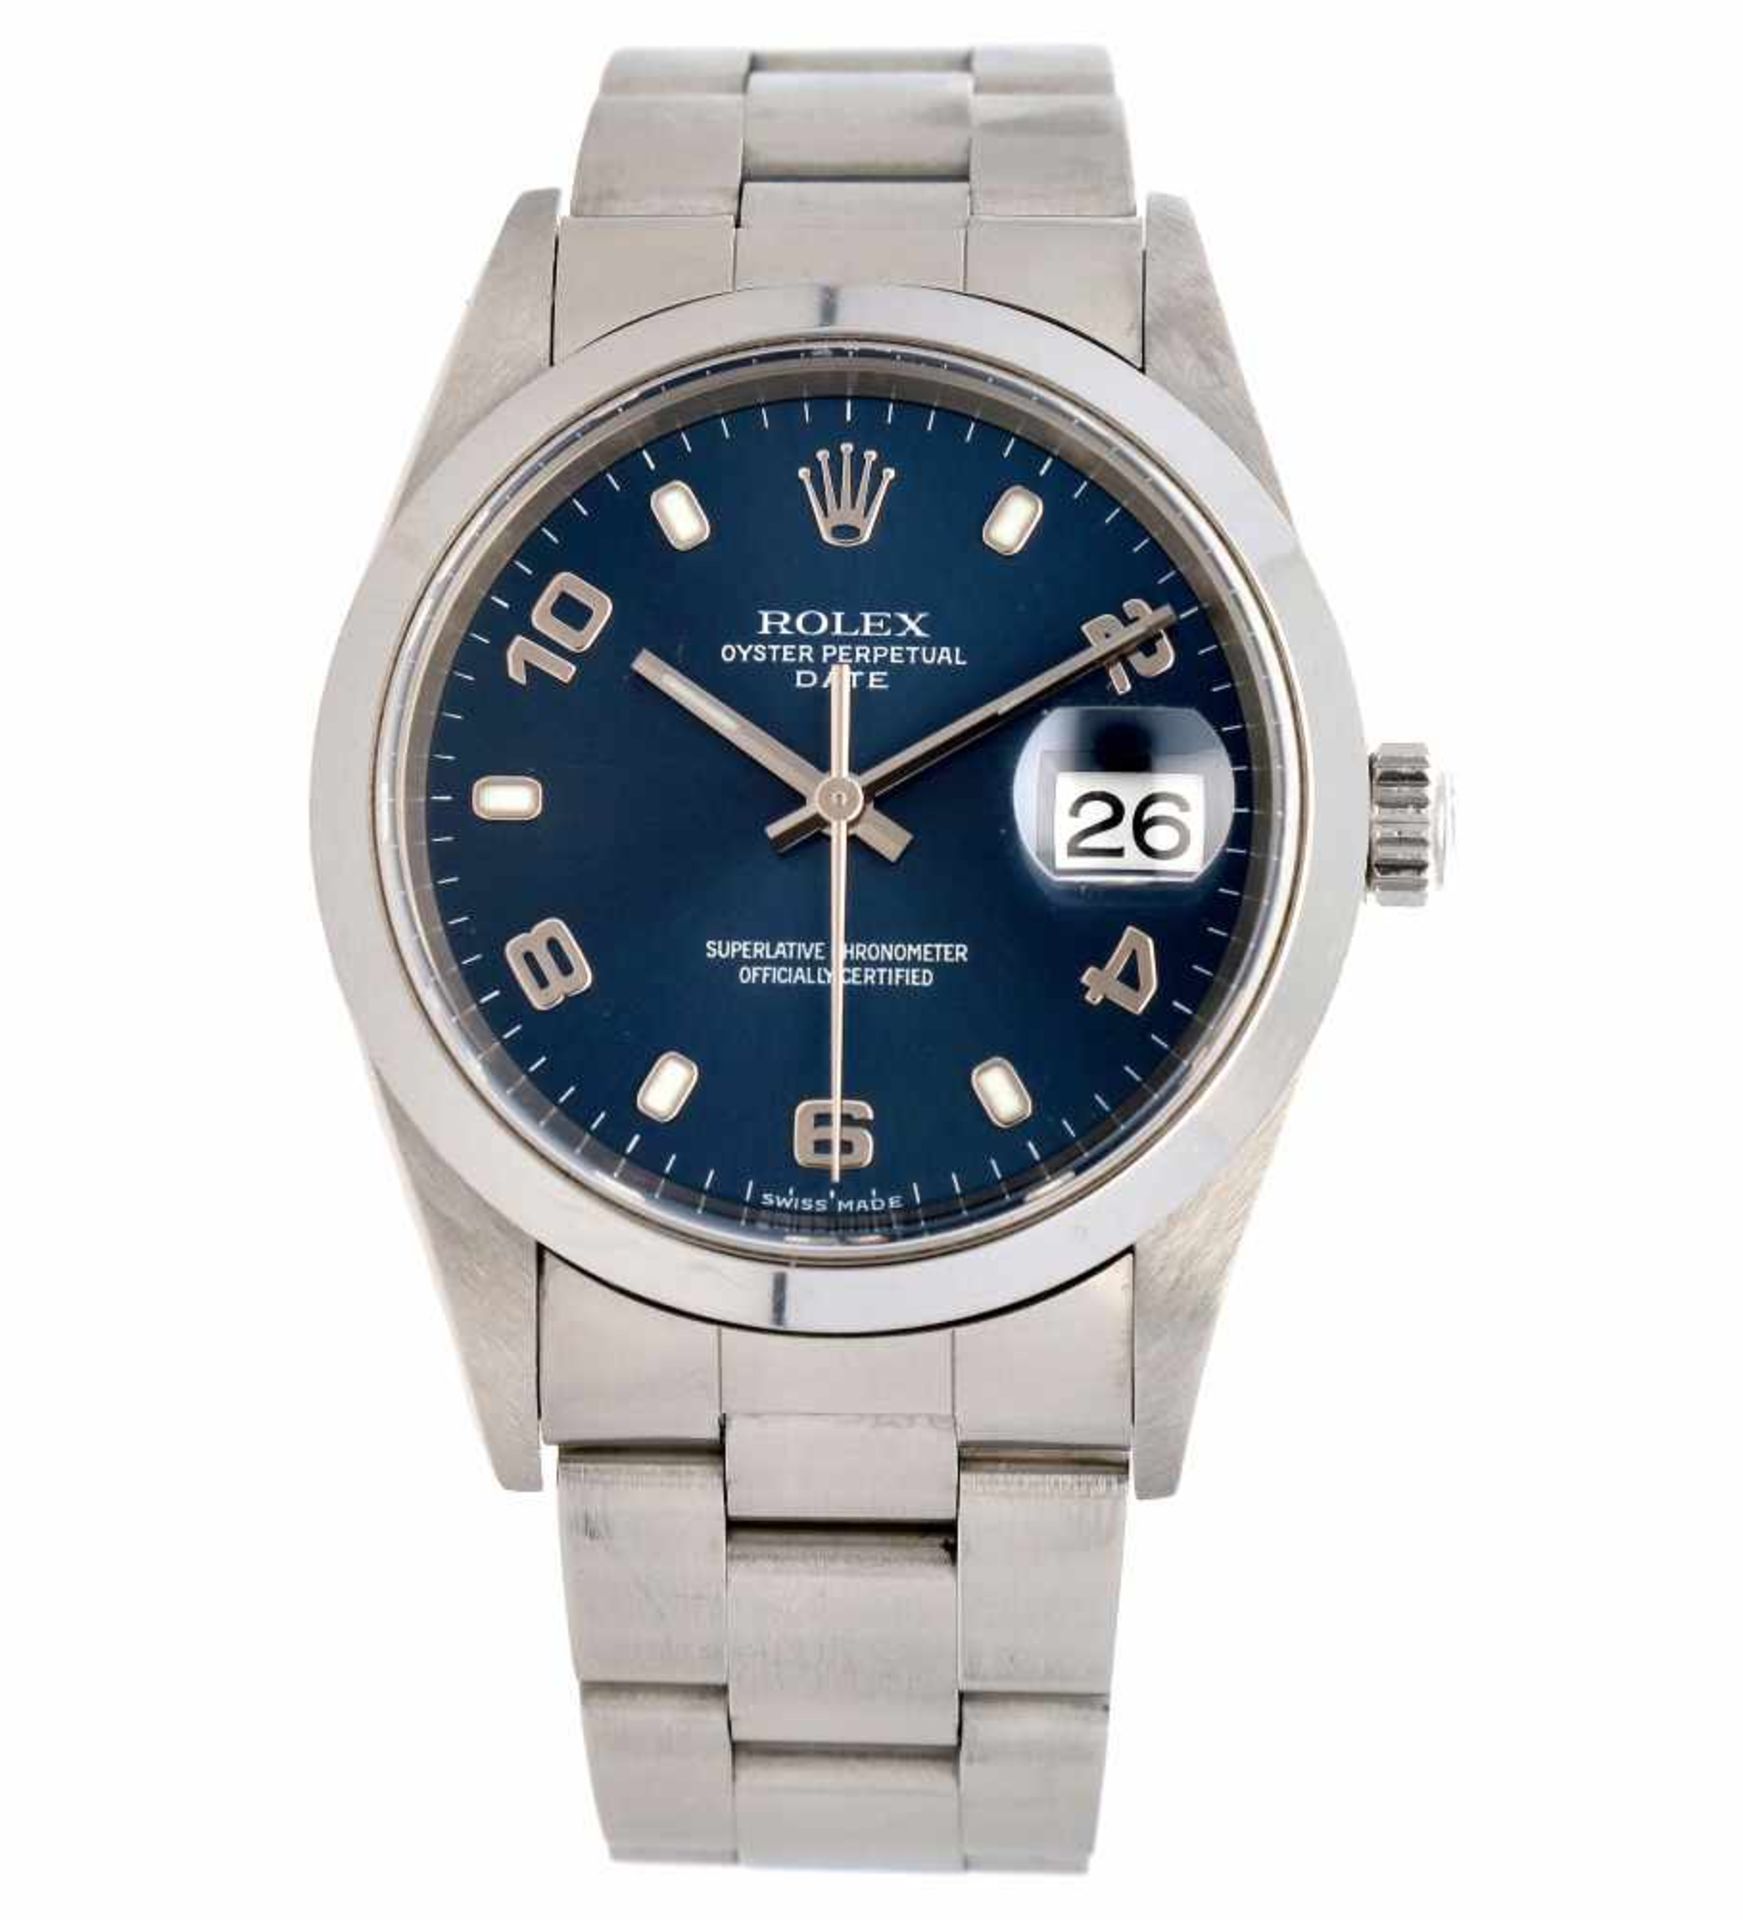 Rolex Datejust 15210 - Men's watch - Automatic - Ca. 2002.